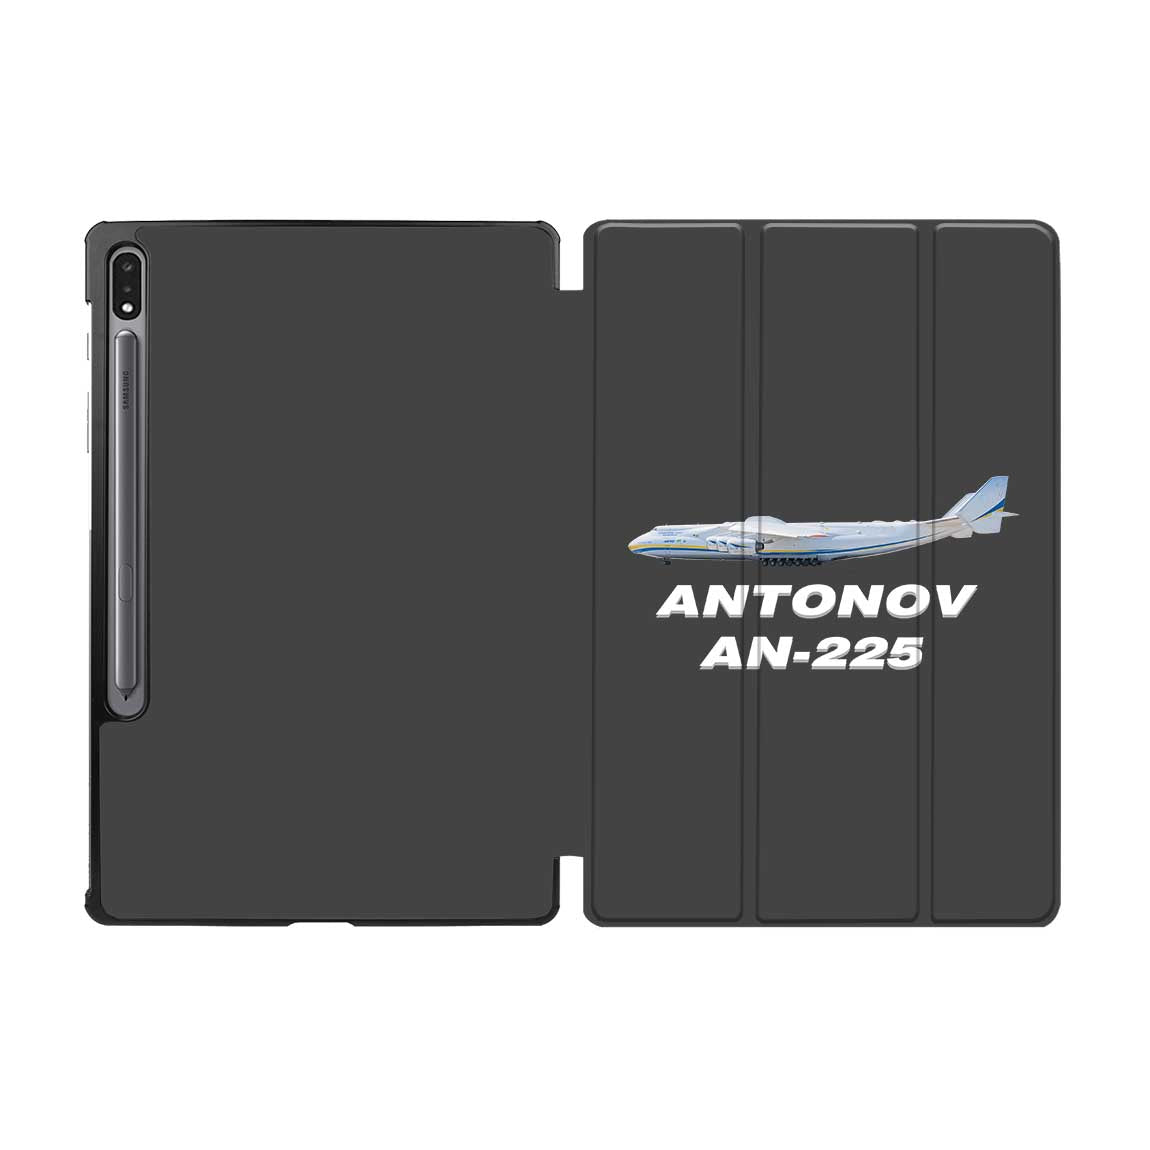 The Antonov AN-225 Designed Samsung Tablet Cases